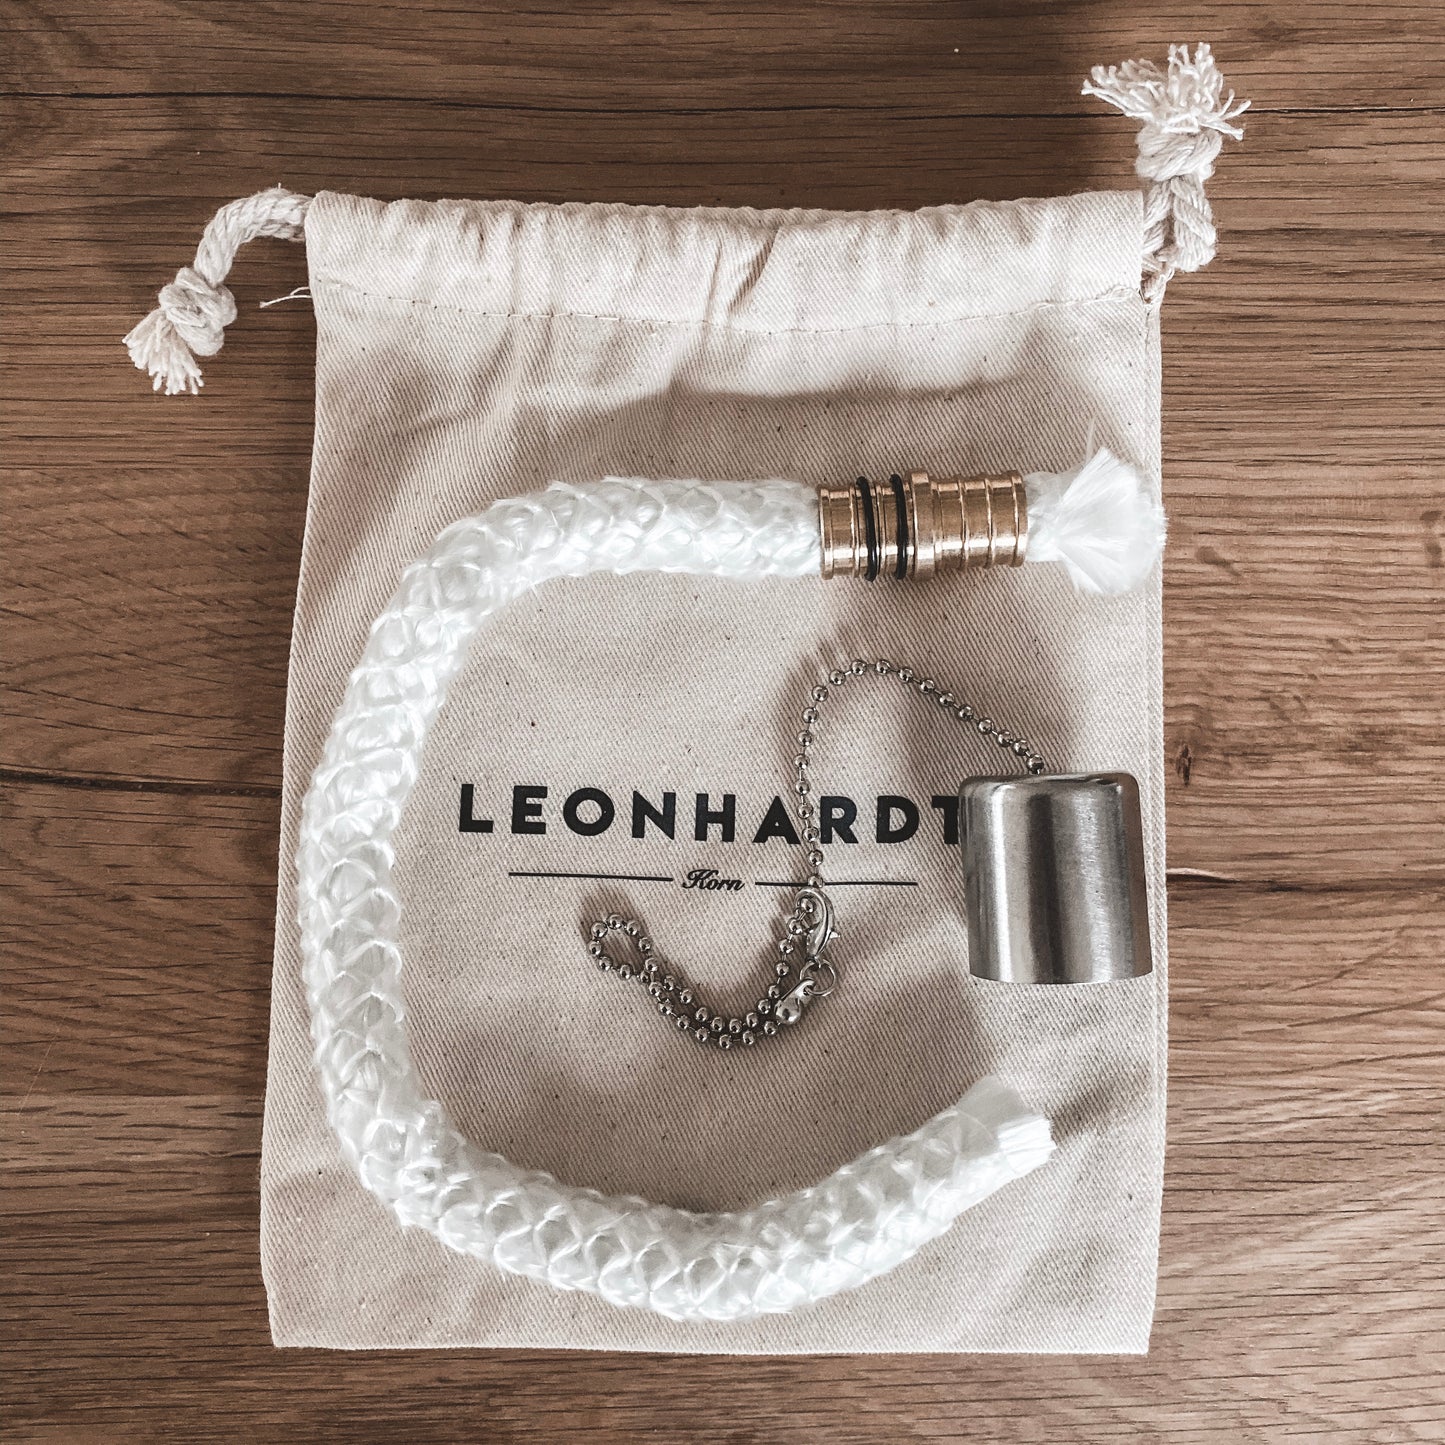 Leonhardt Korn // Öl-Lampen Set